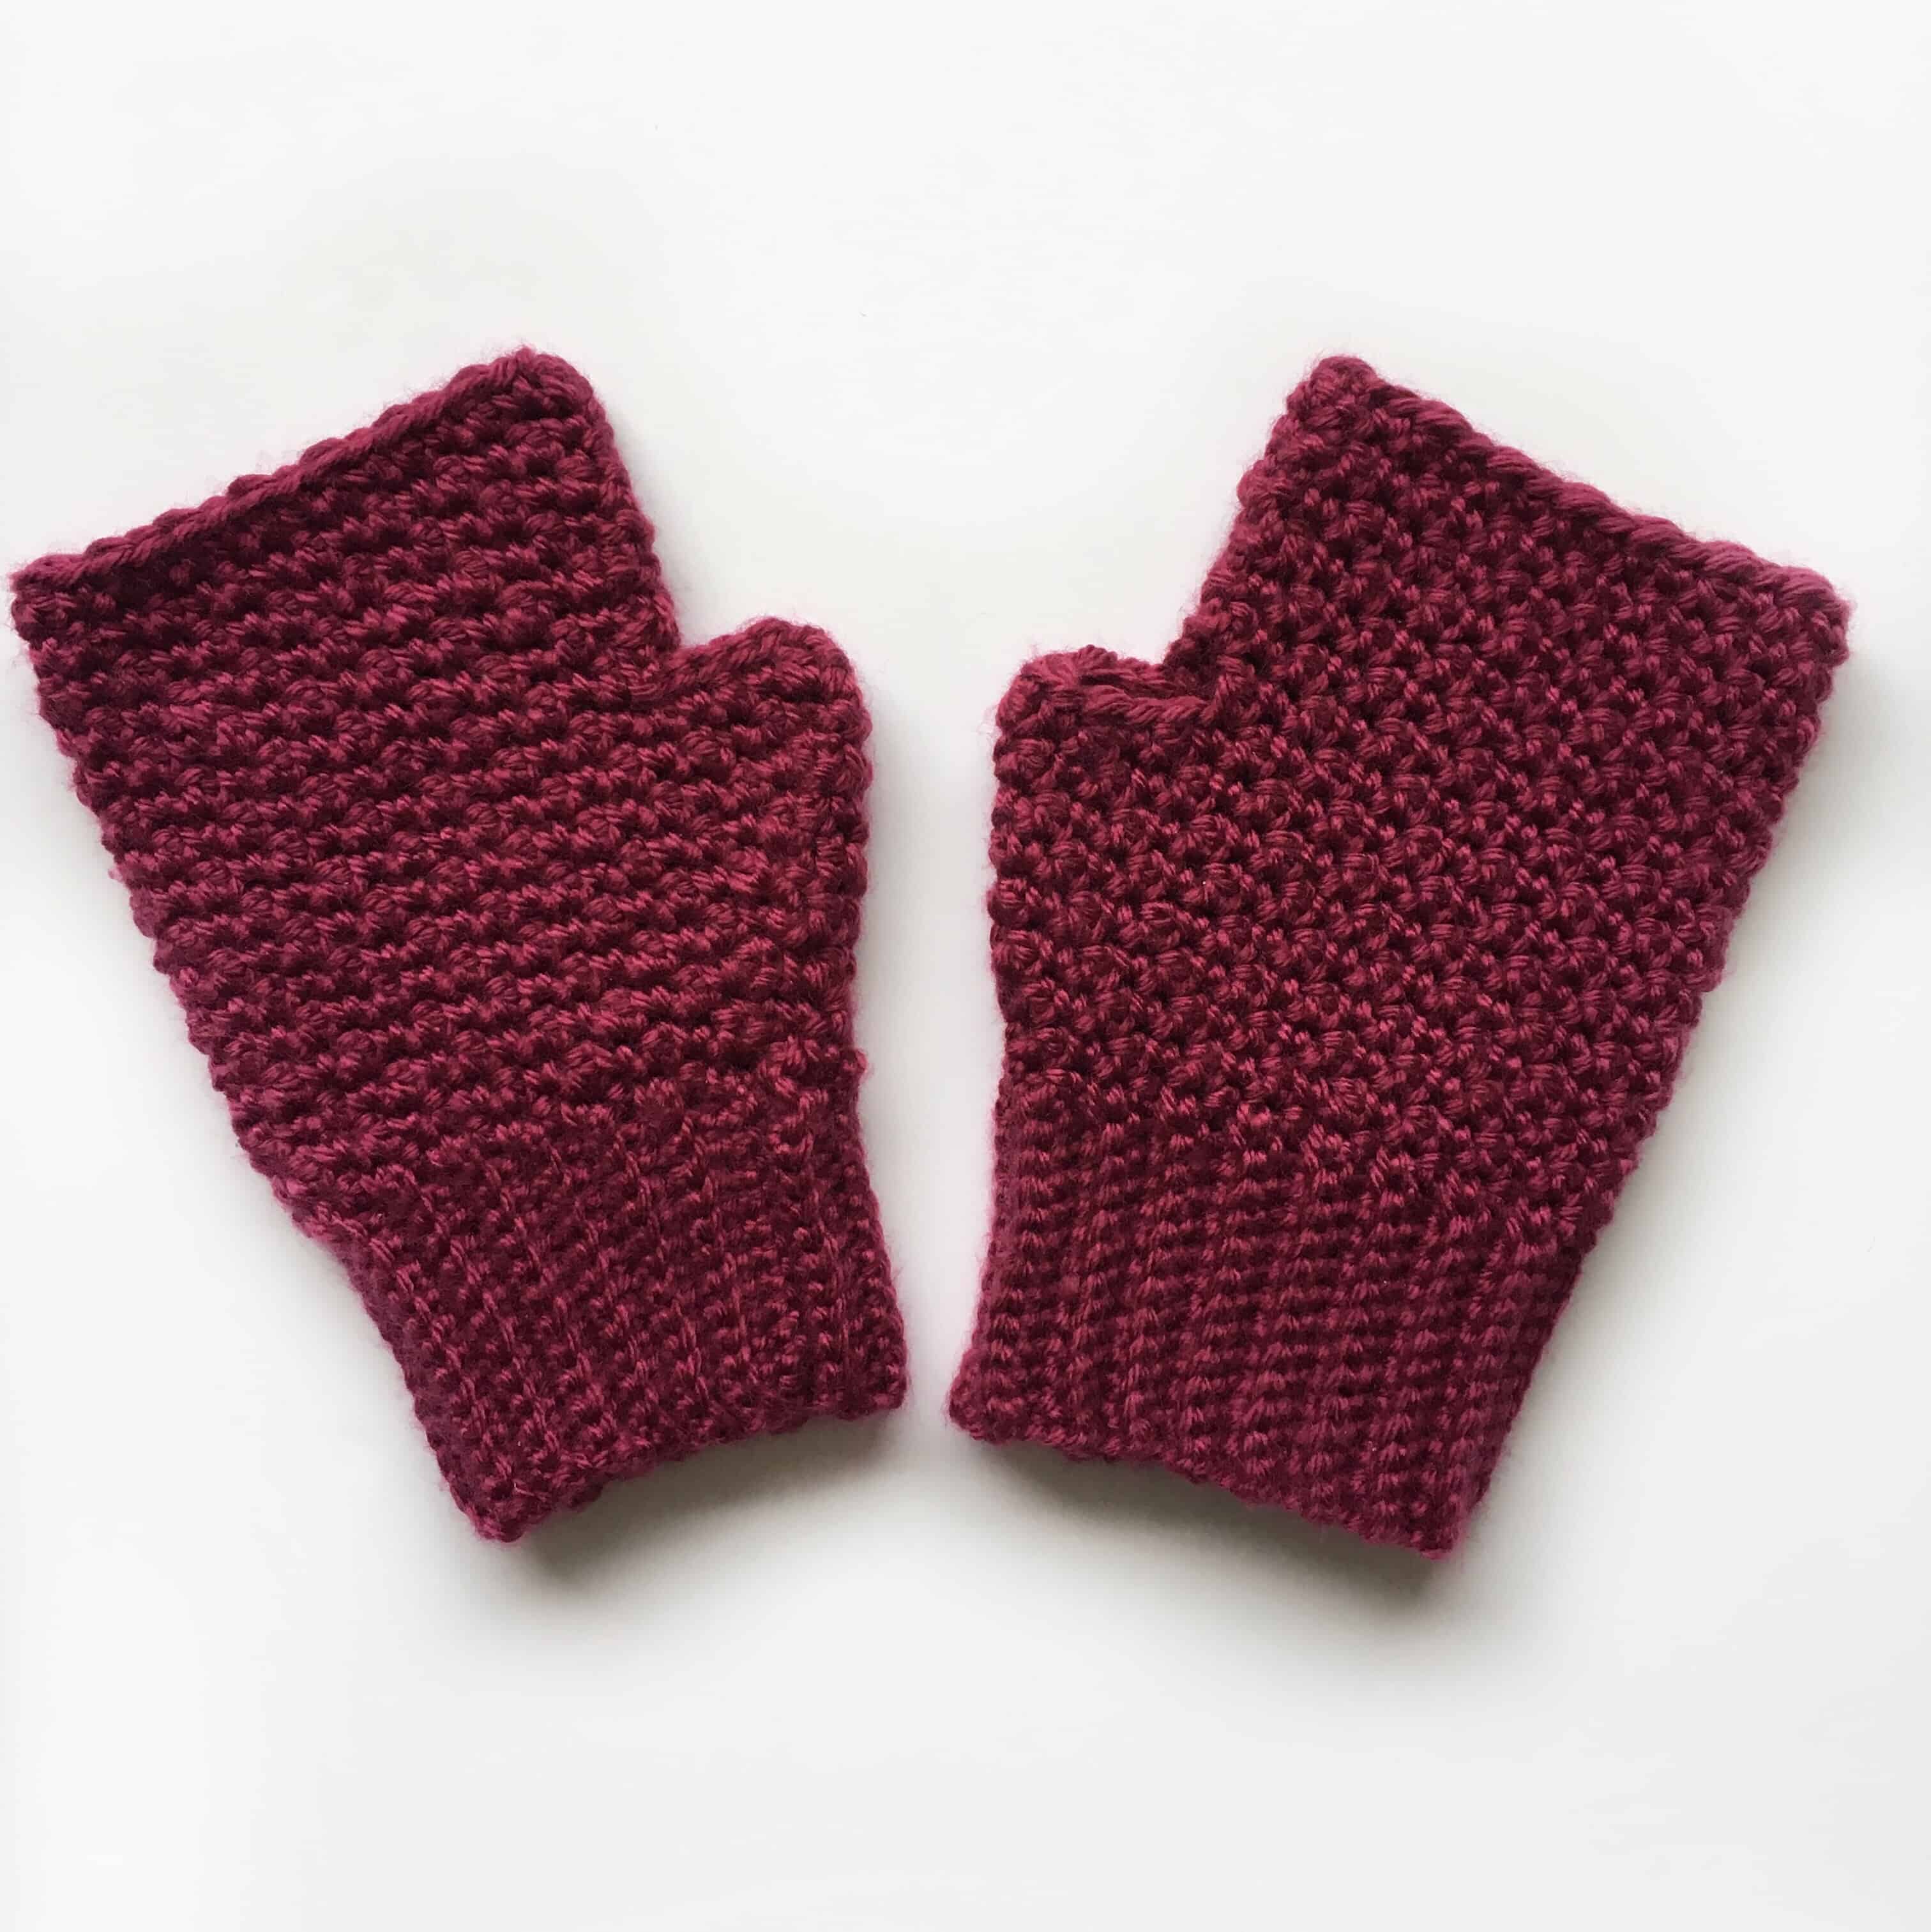 Free crochet mittens pattern